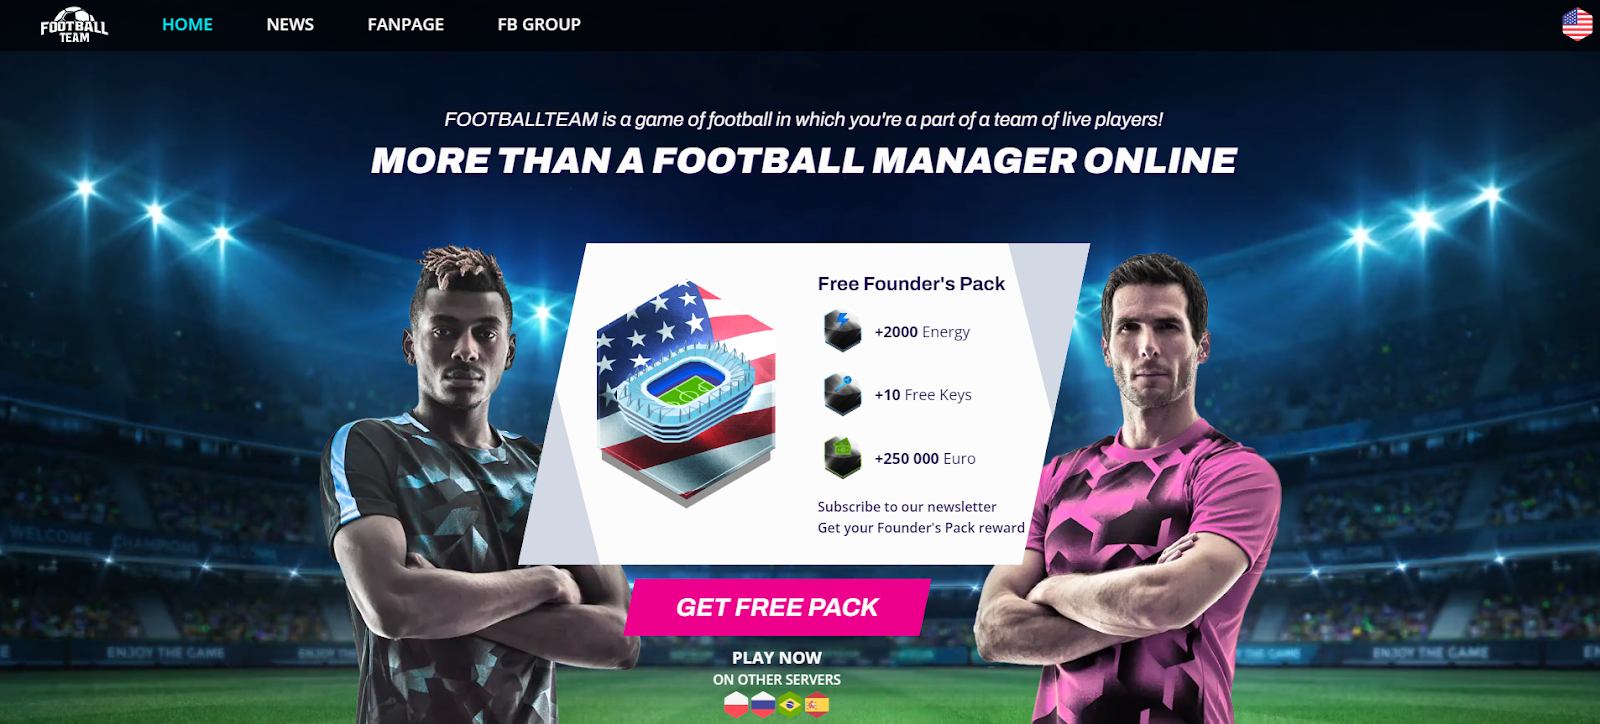 FootballTeam's official site